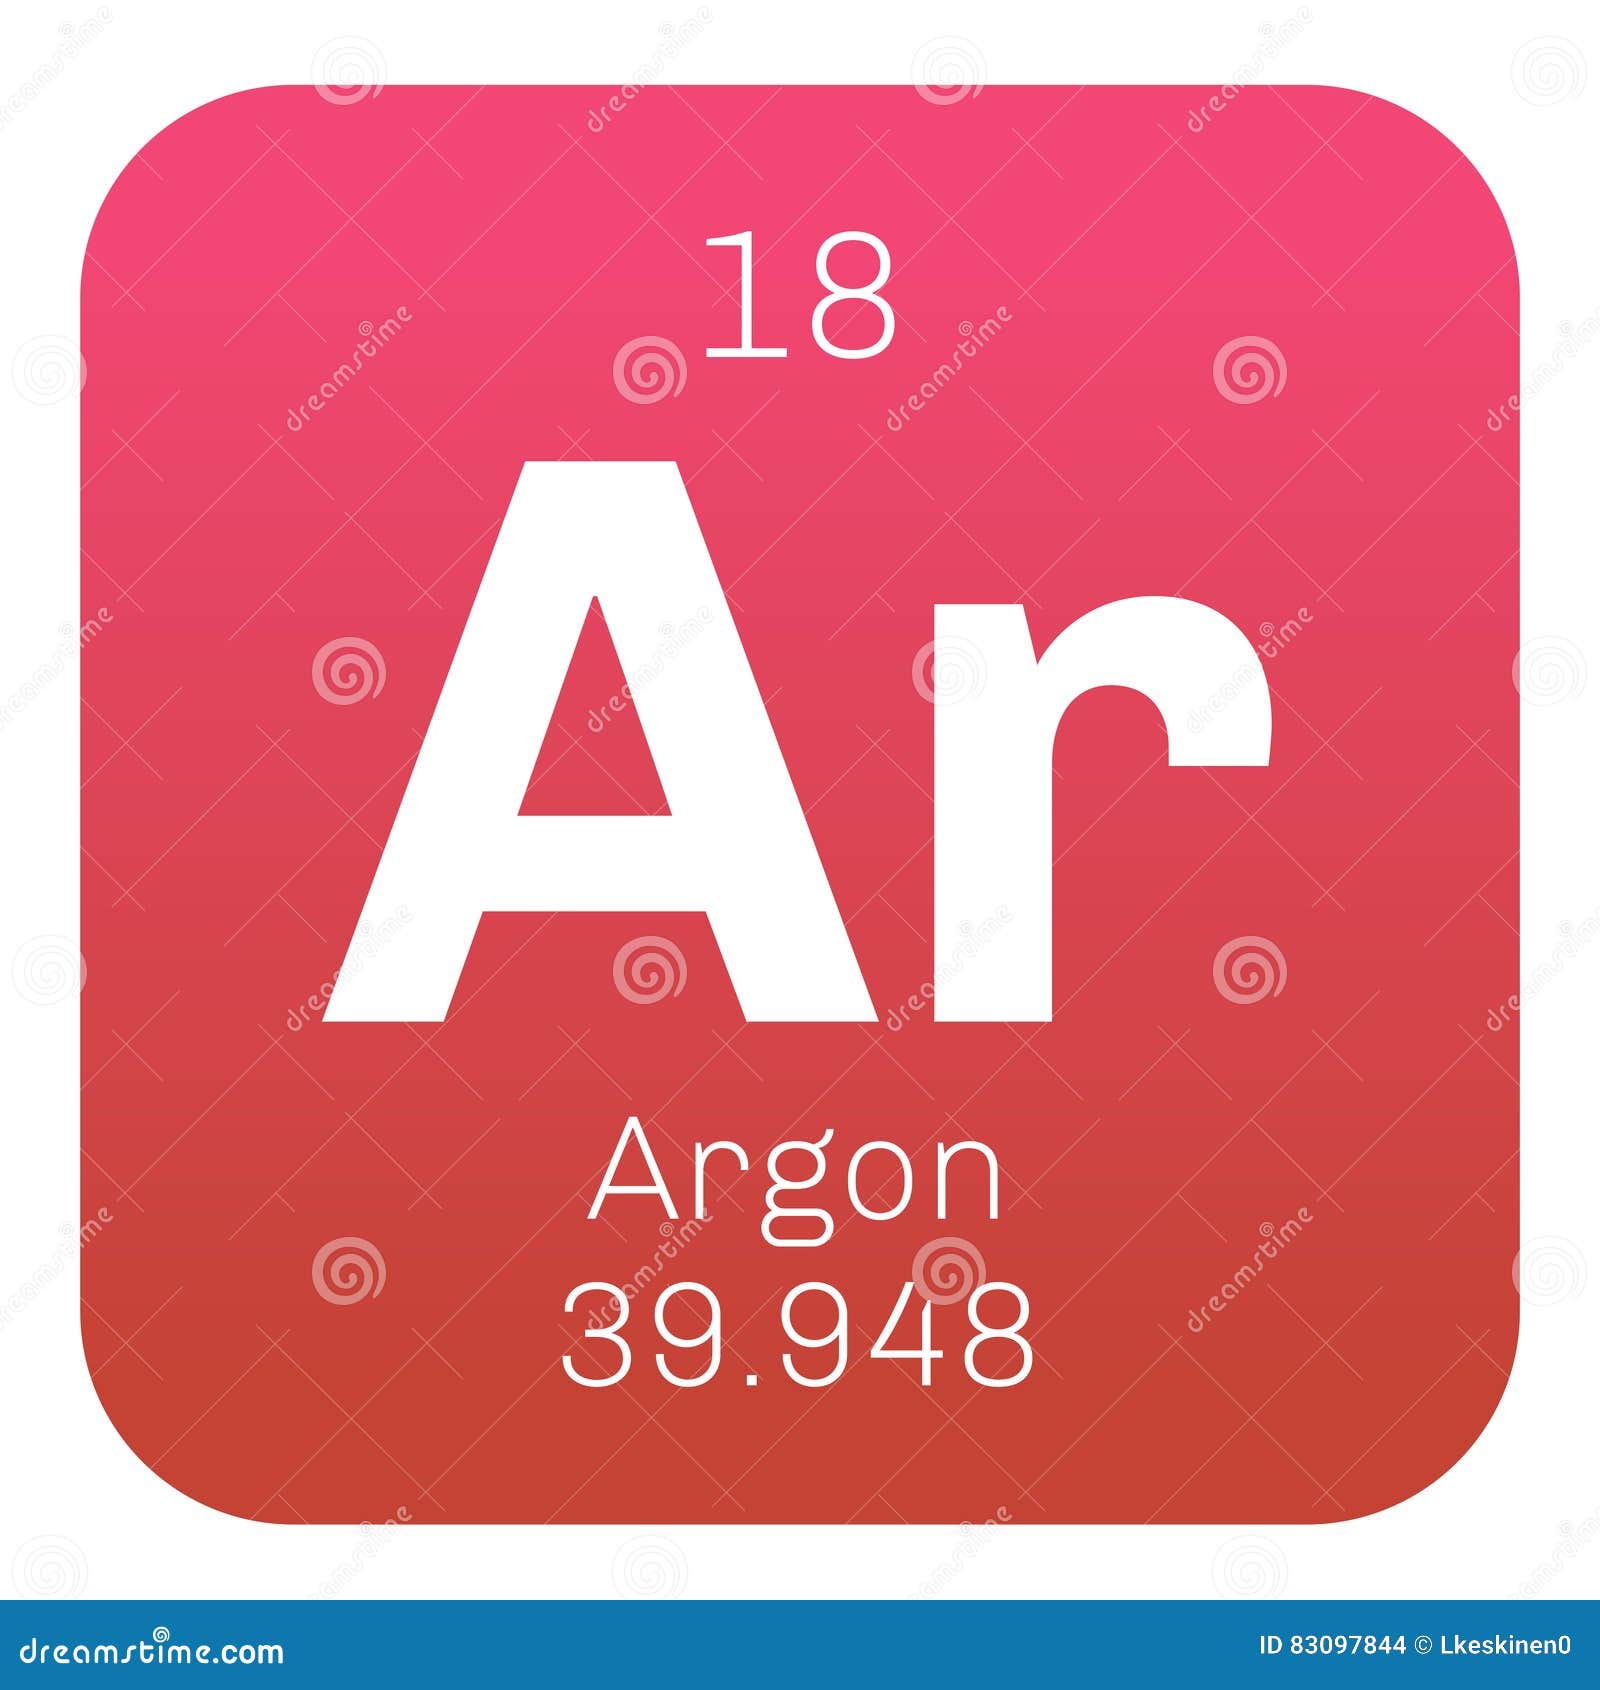 argon chemical 